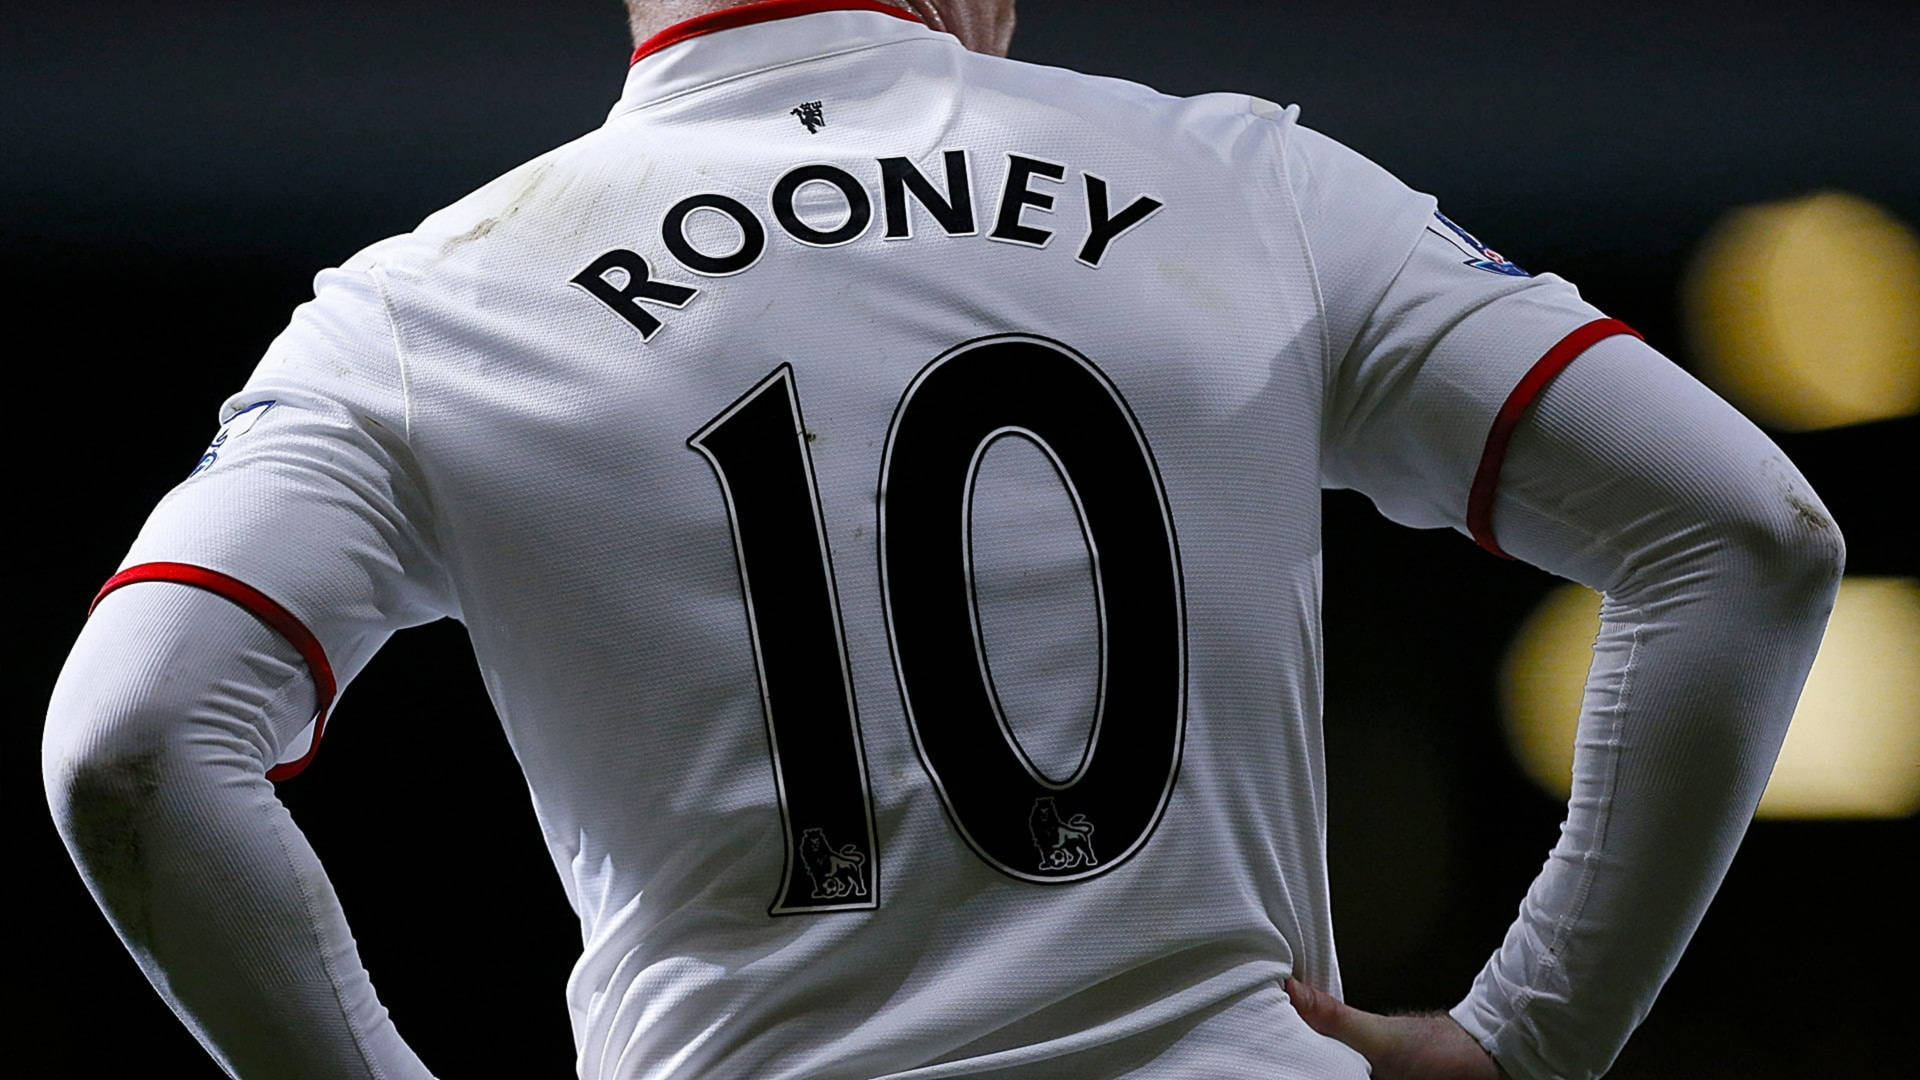 Wayne Rooney Football Jersey